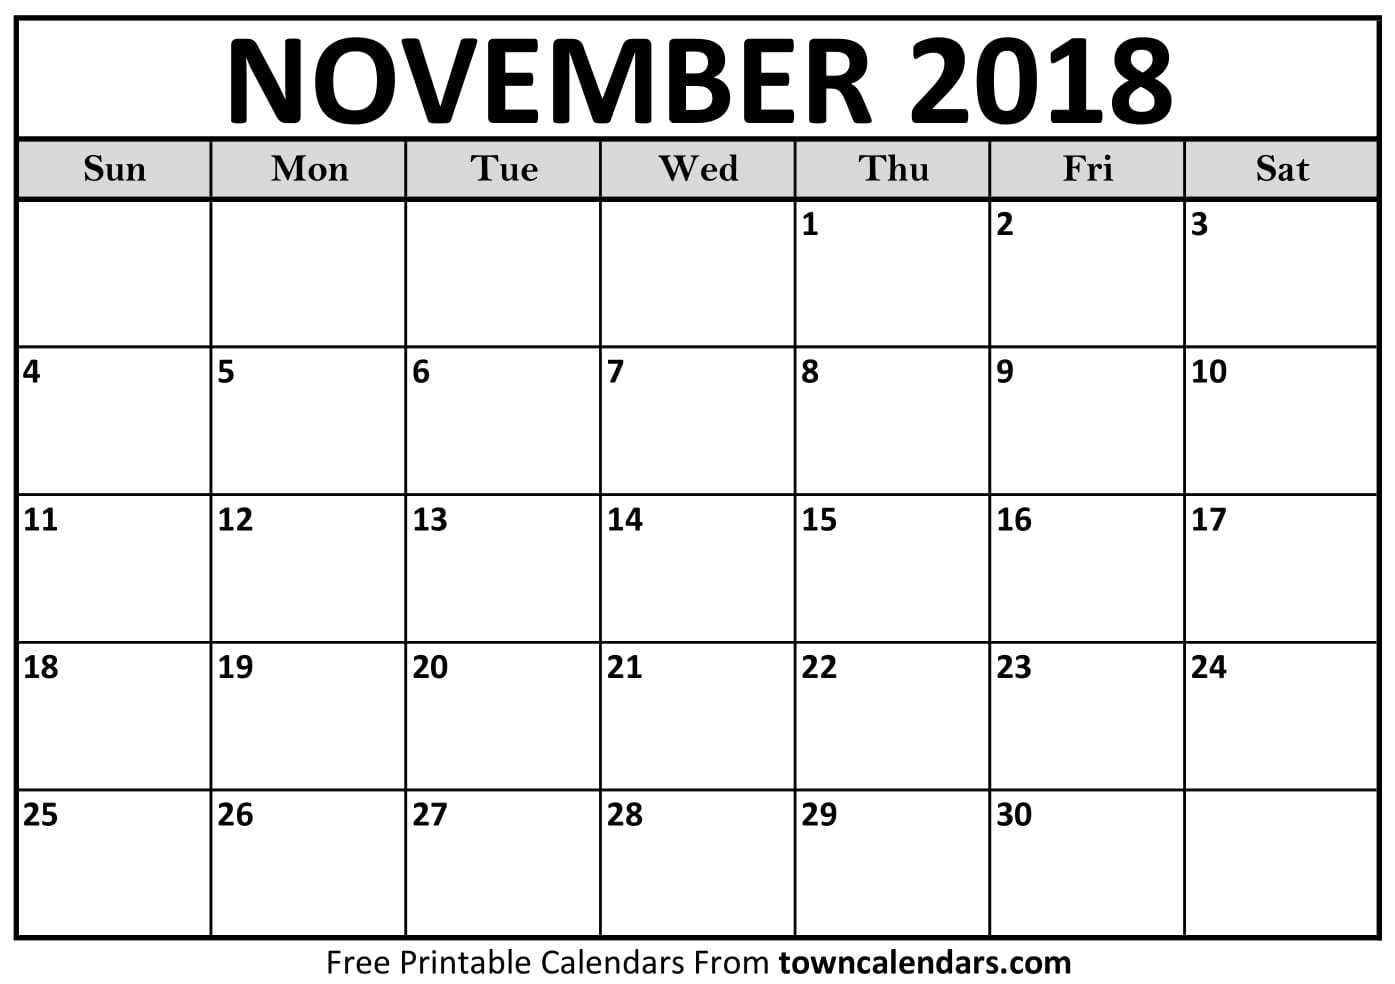 printable-november-2018-calendar-towncalendars